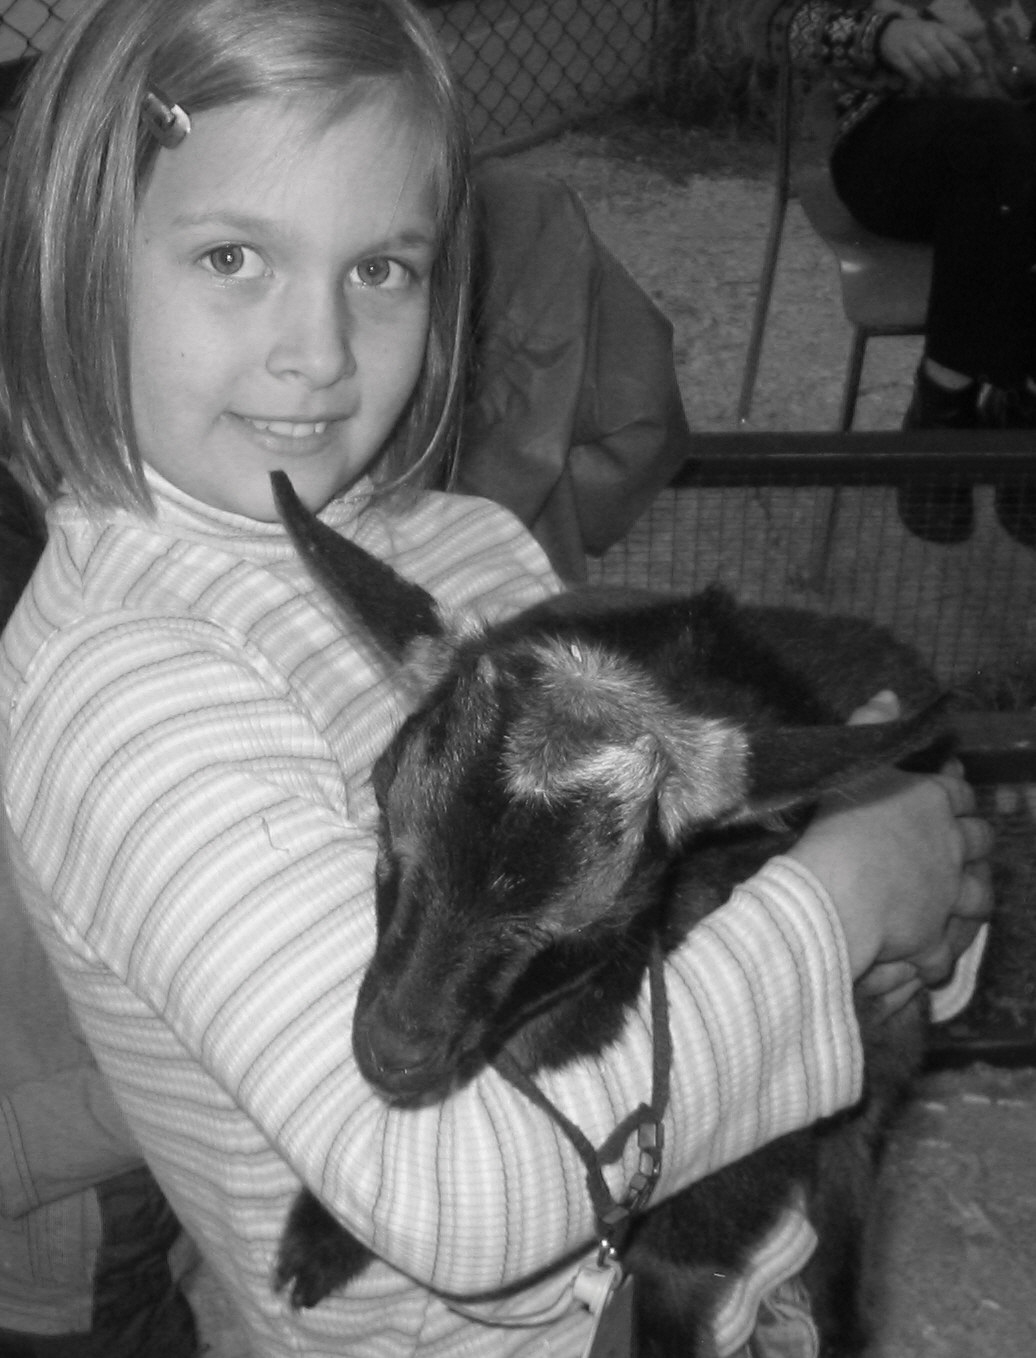 [Hannah+and+goat.jpg]